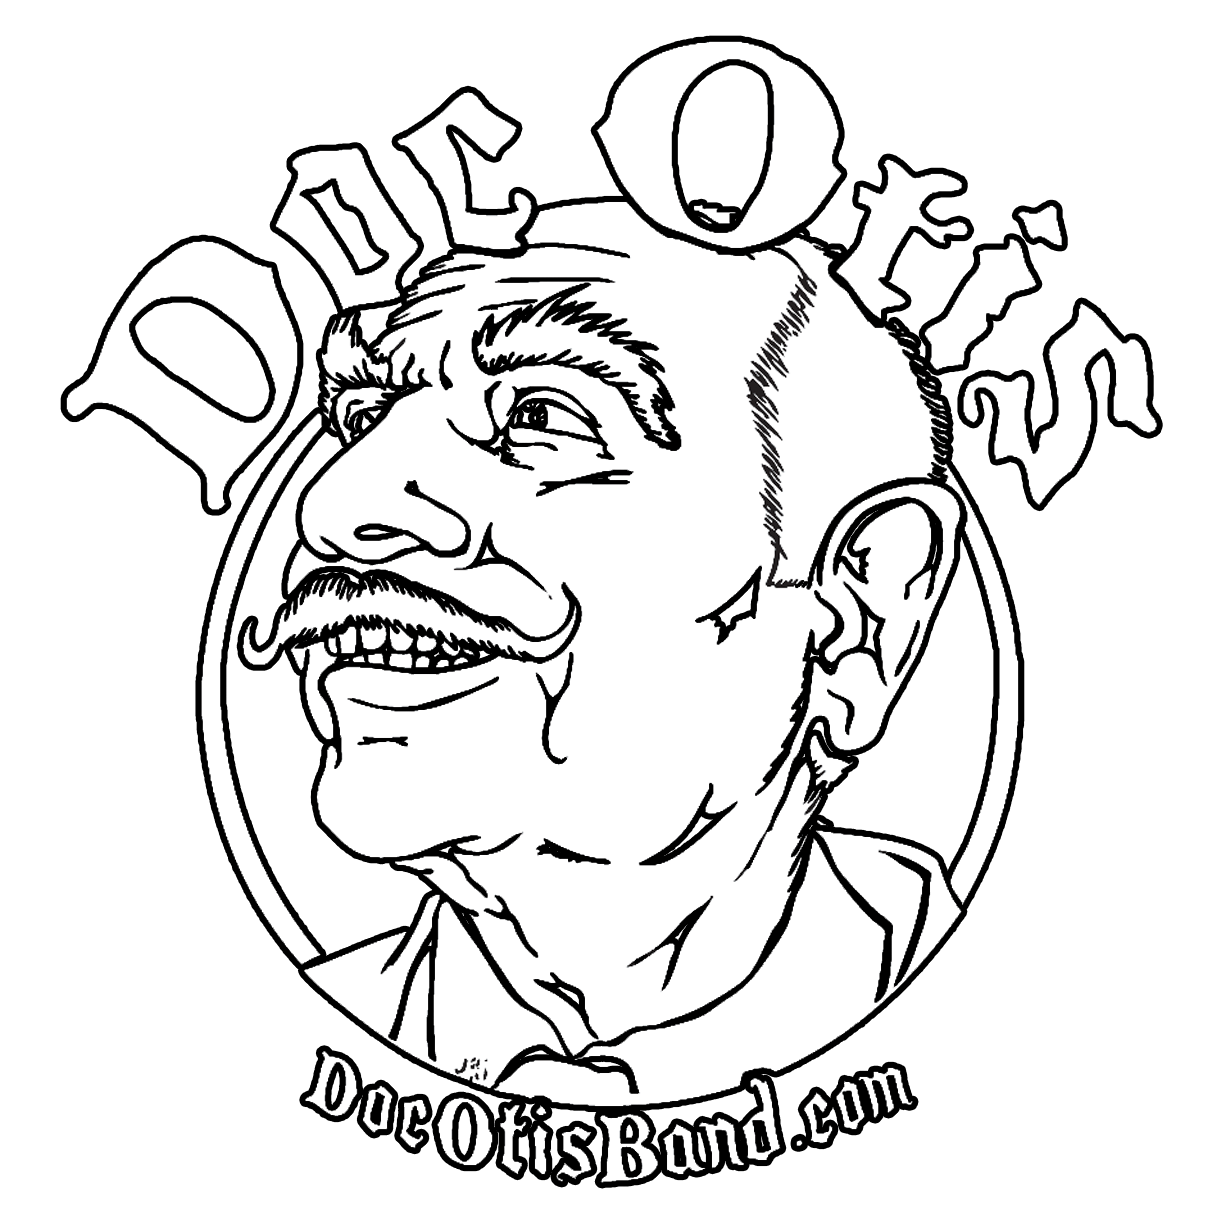 Doc Otis